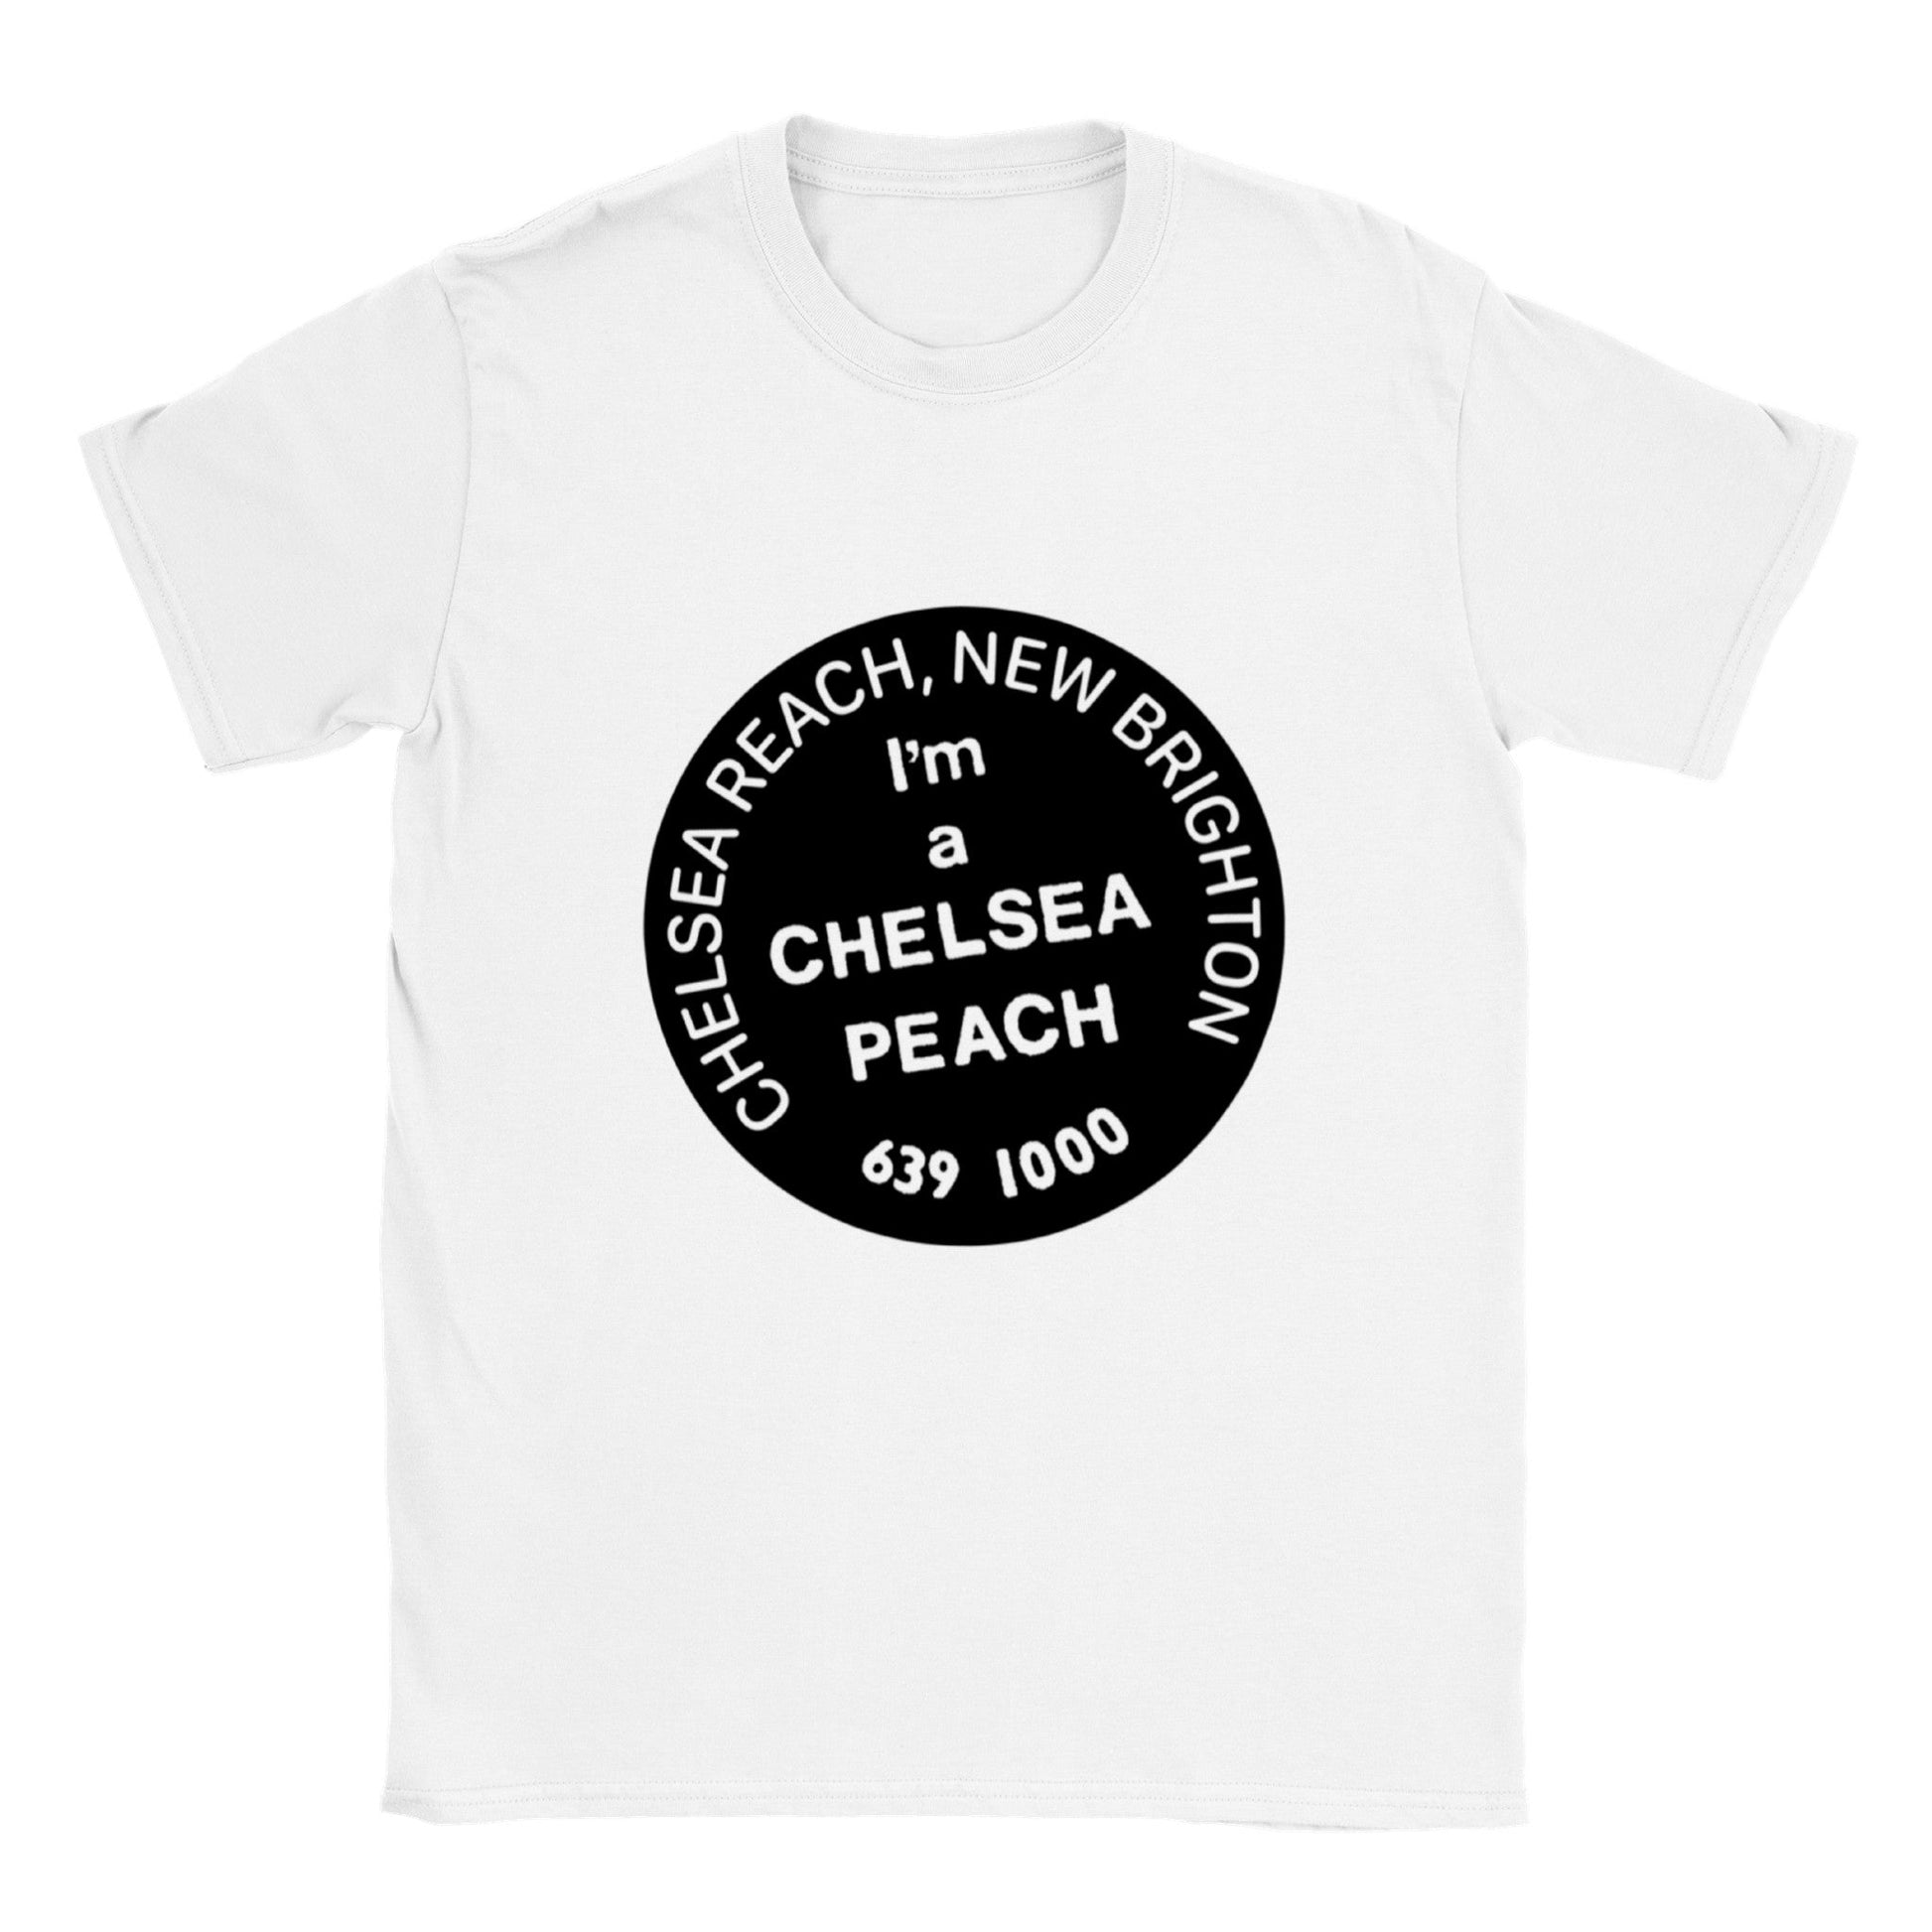 Chelsea Reach/Chelsea Peach unisex fit T-shirt - various colours - Dirty Stop Outs